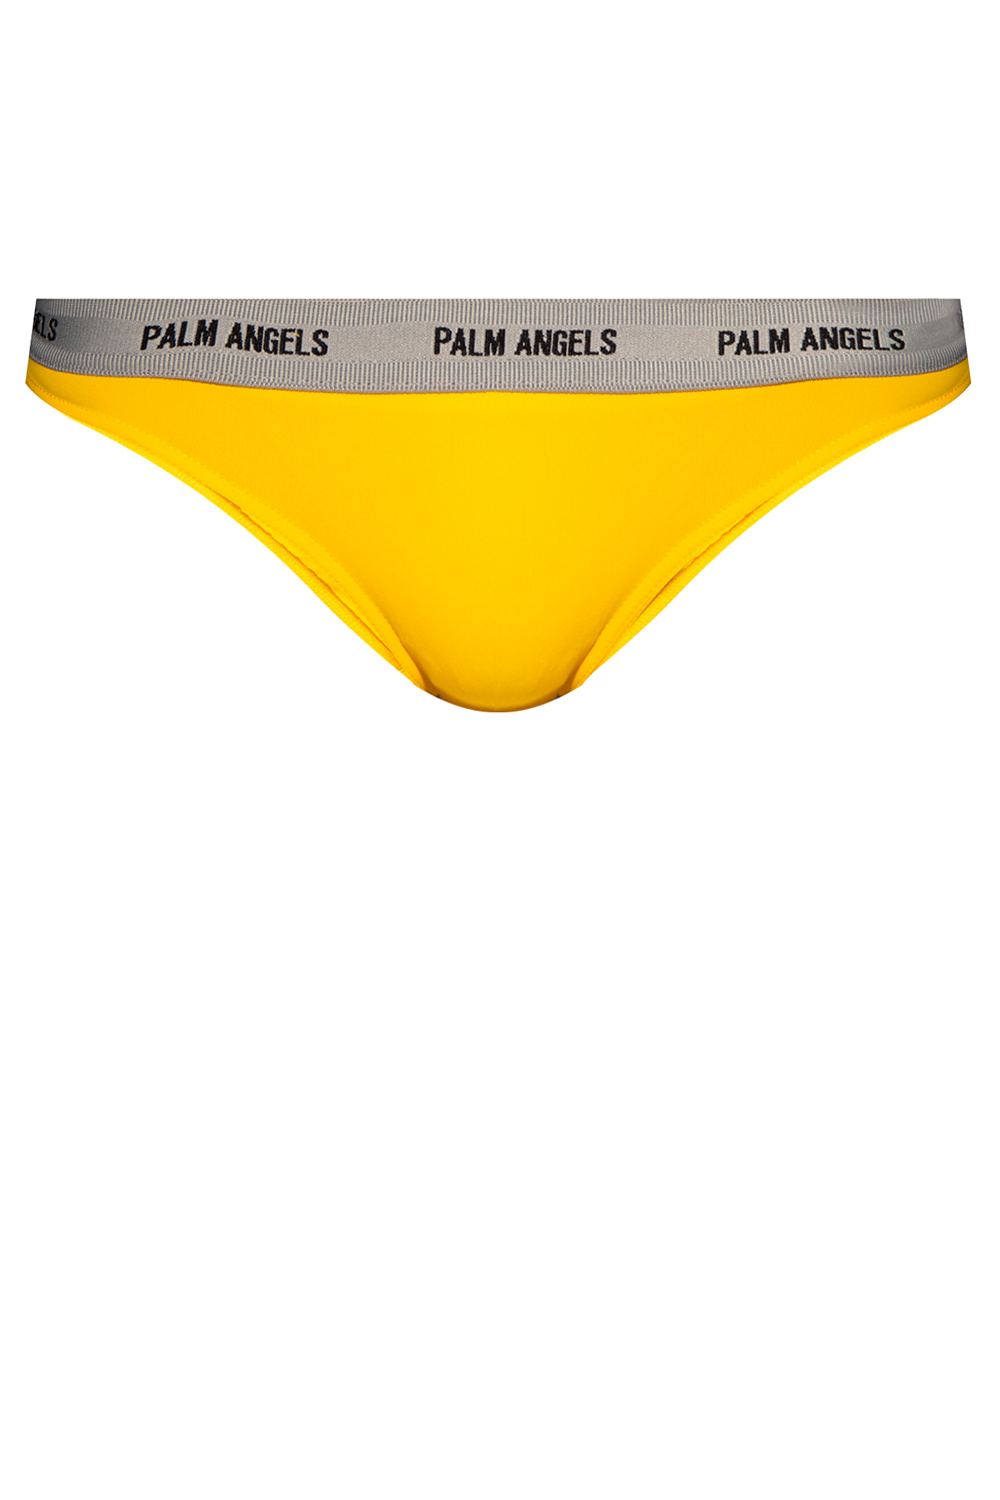 Palm Angels Swimsuit bottom